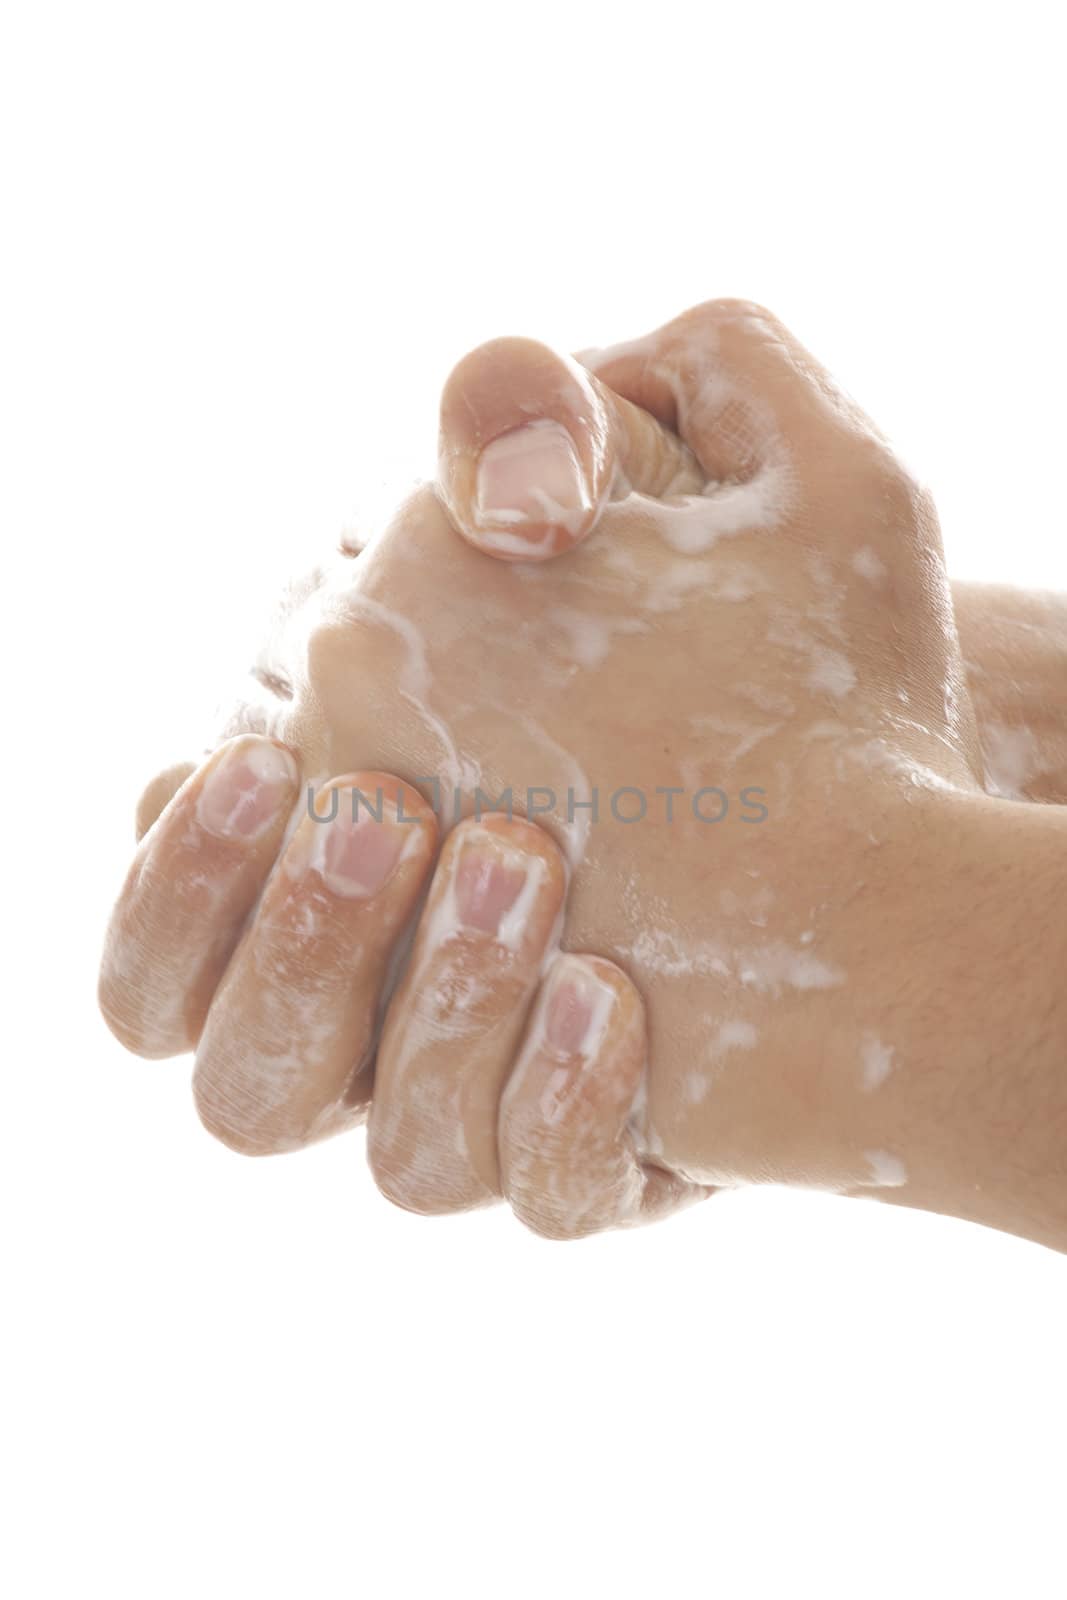 washing hand against white background by senkaya